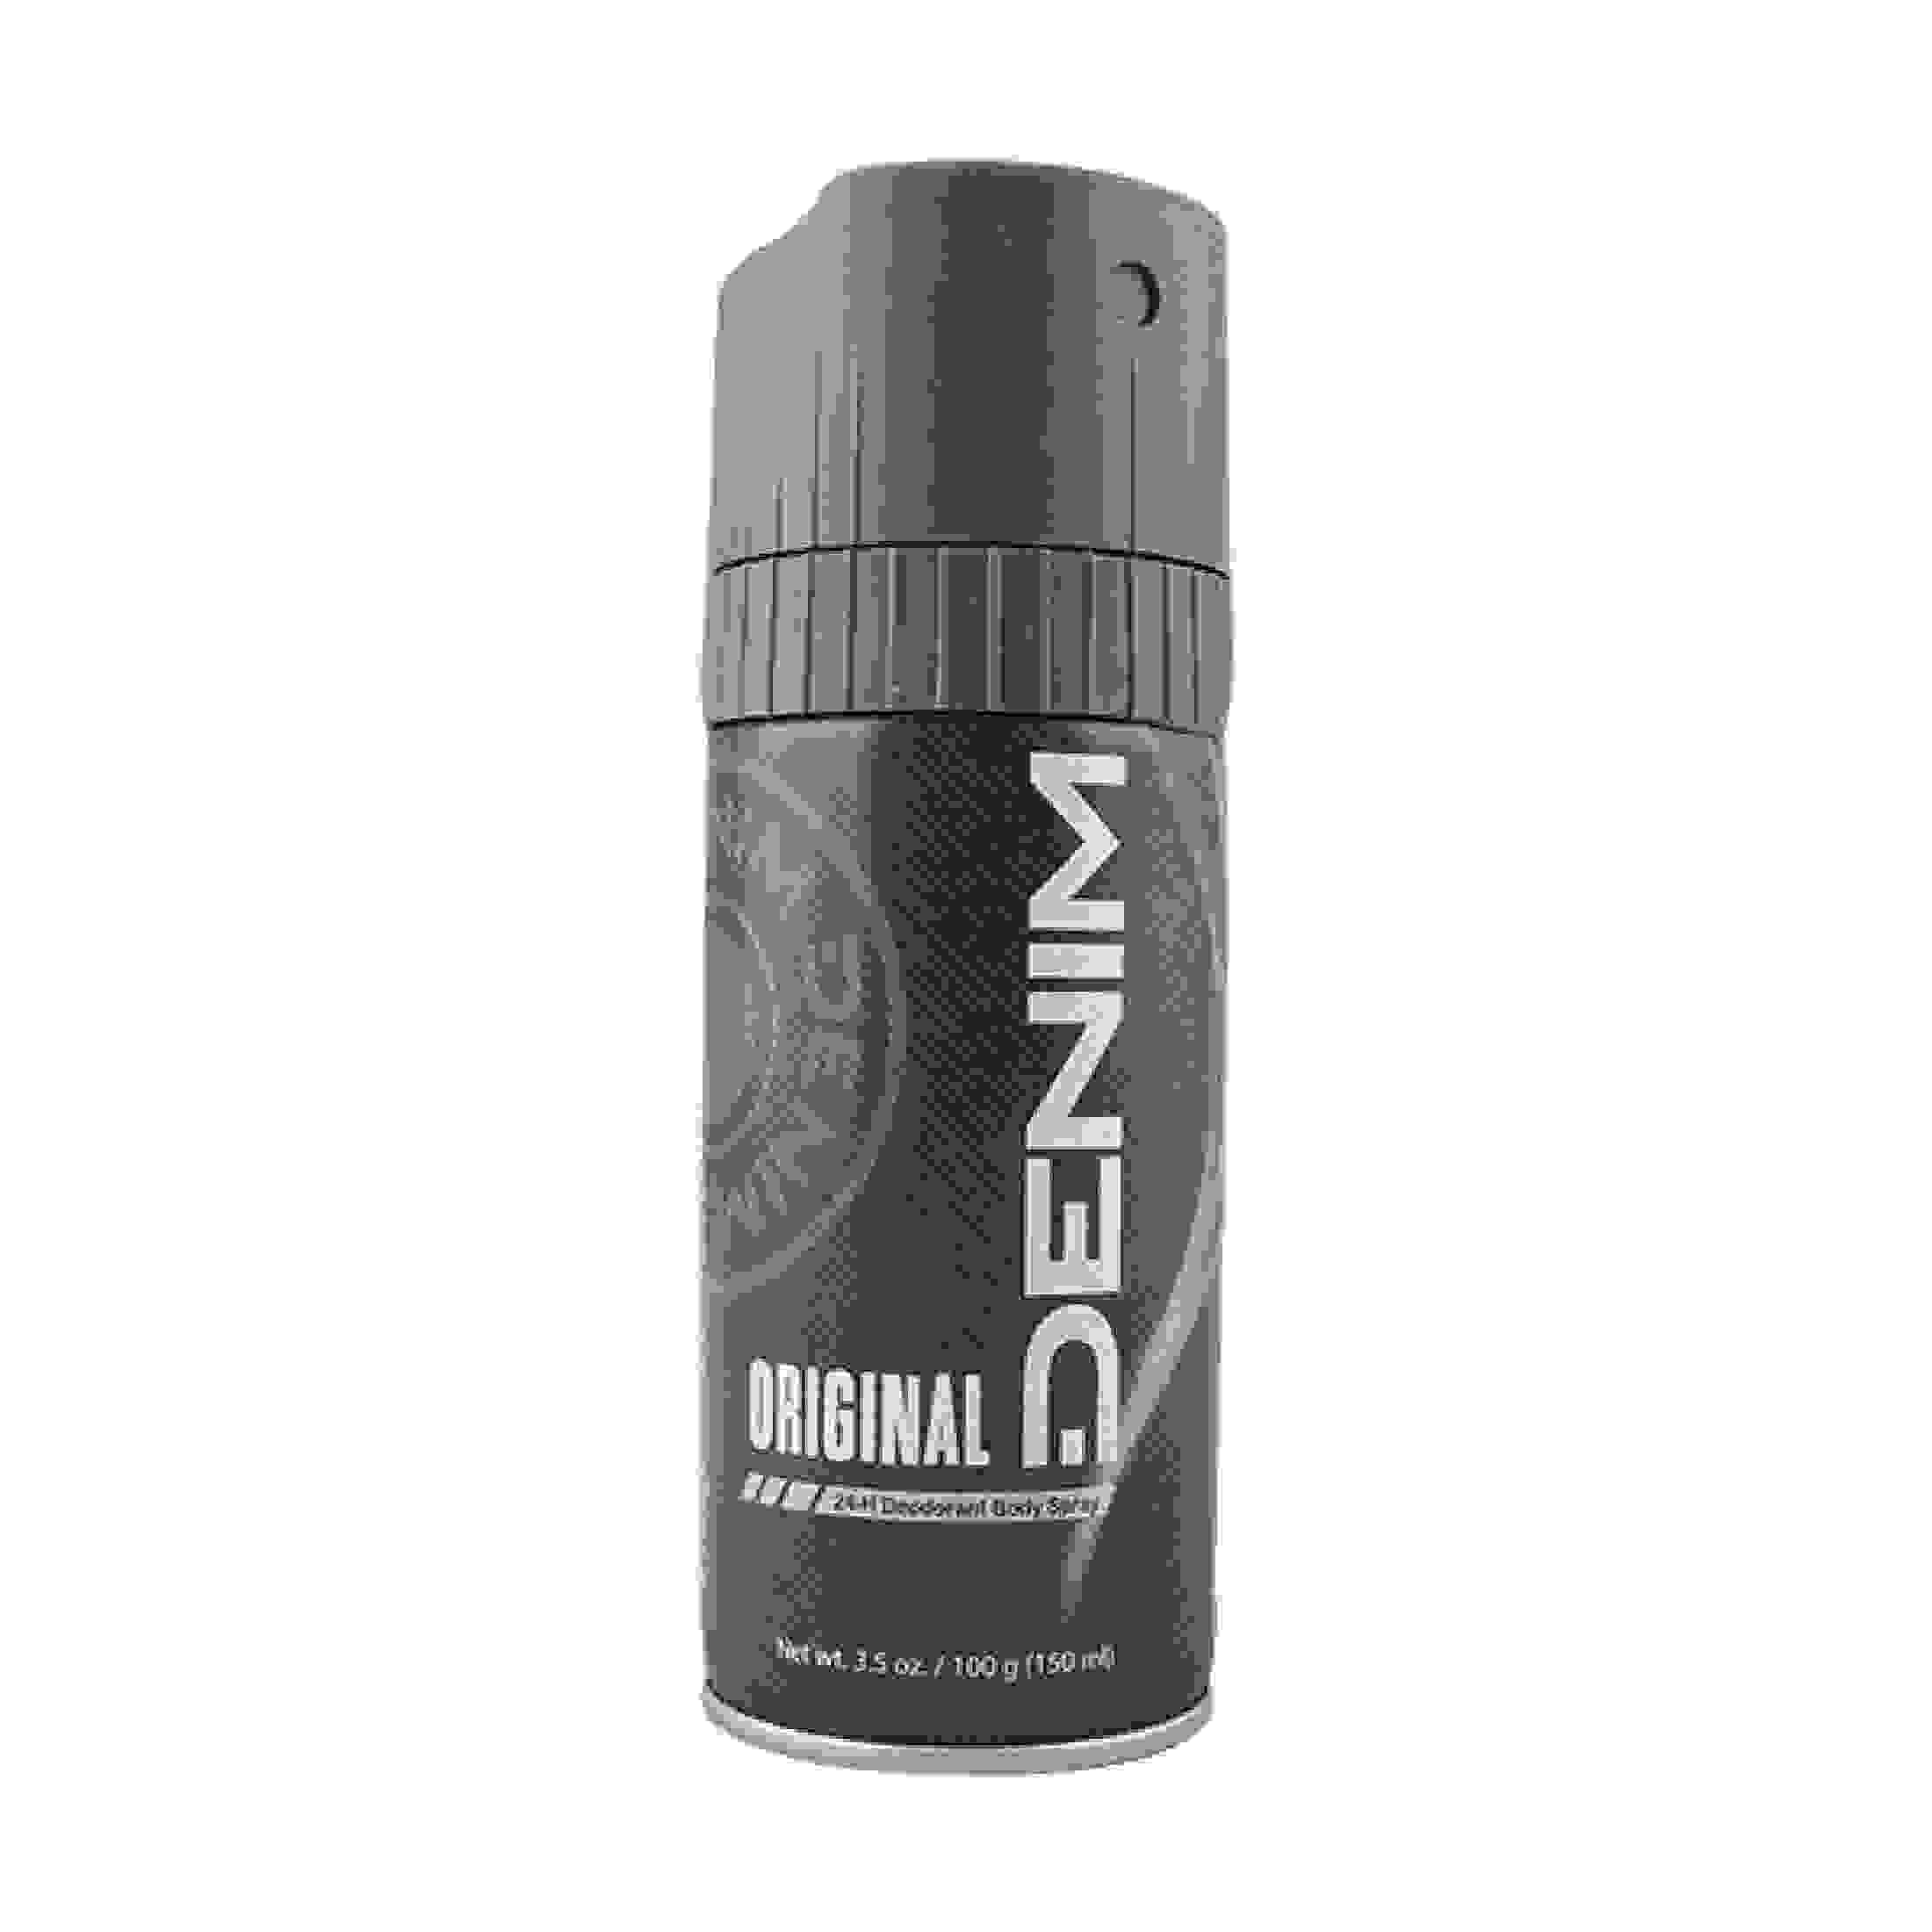 Deodorant Body Spray For Men - 150ml